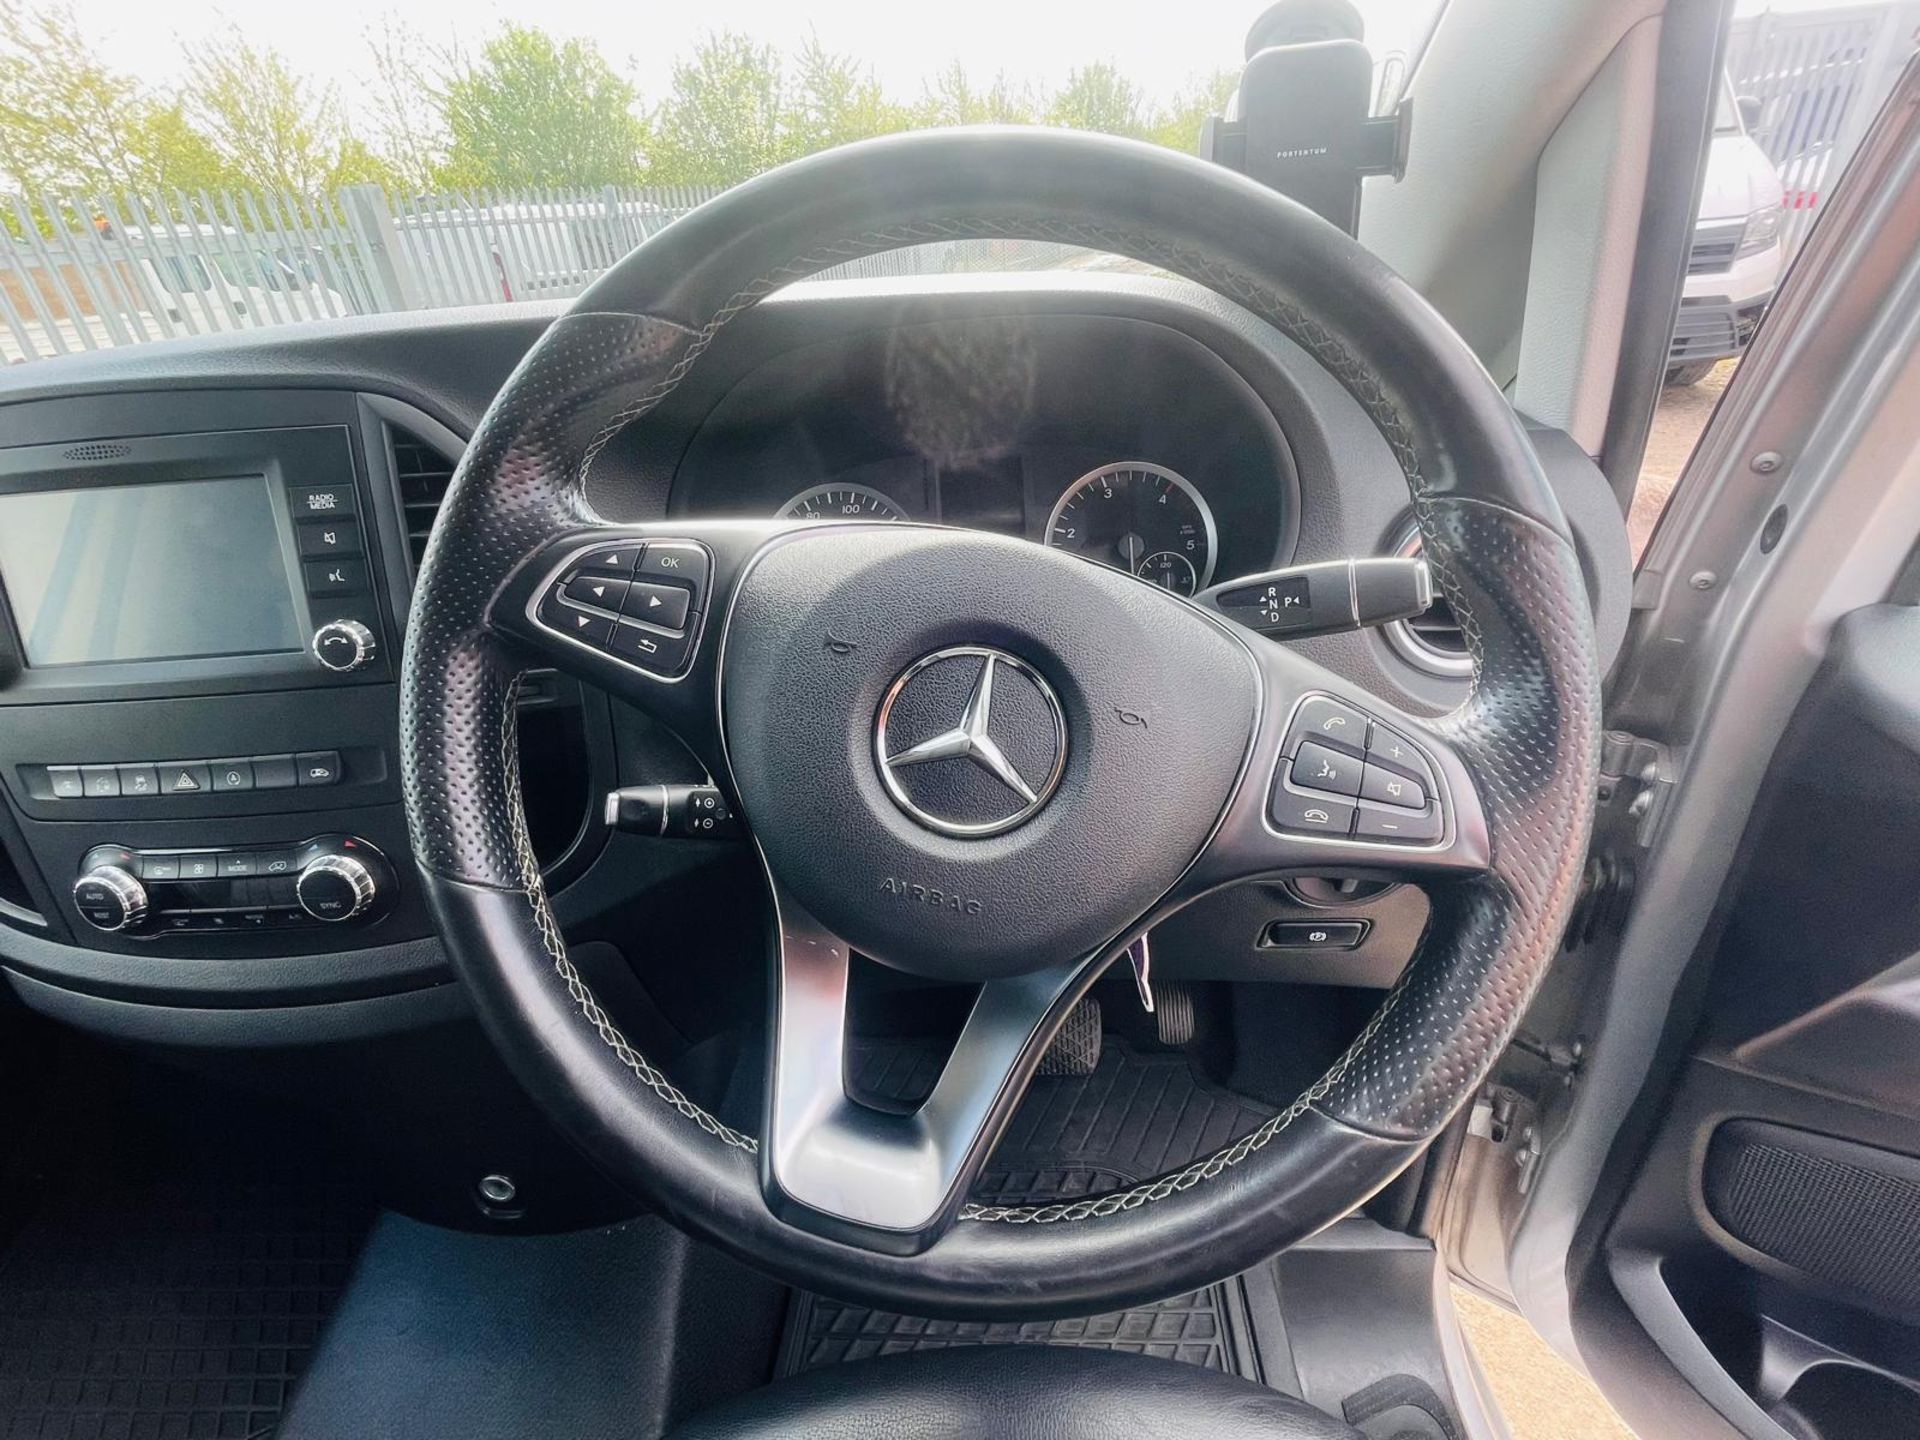 Mercedes-Benz Vito Premium 2.1 119 CDI 7G Tronic Crew Cab LWB Automatic 2019'19 Reg'- Alloy Wheels - Image 17 of 31